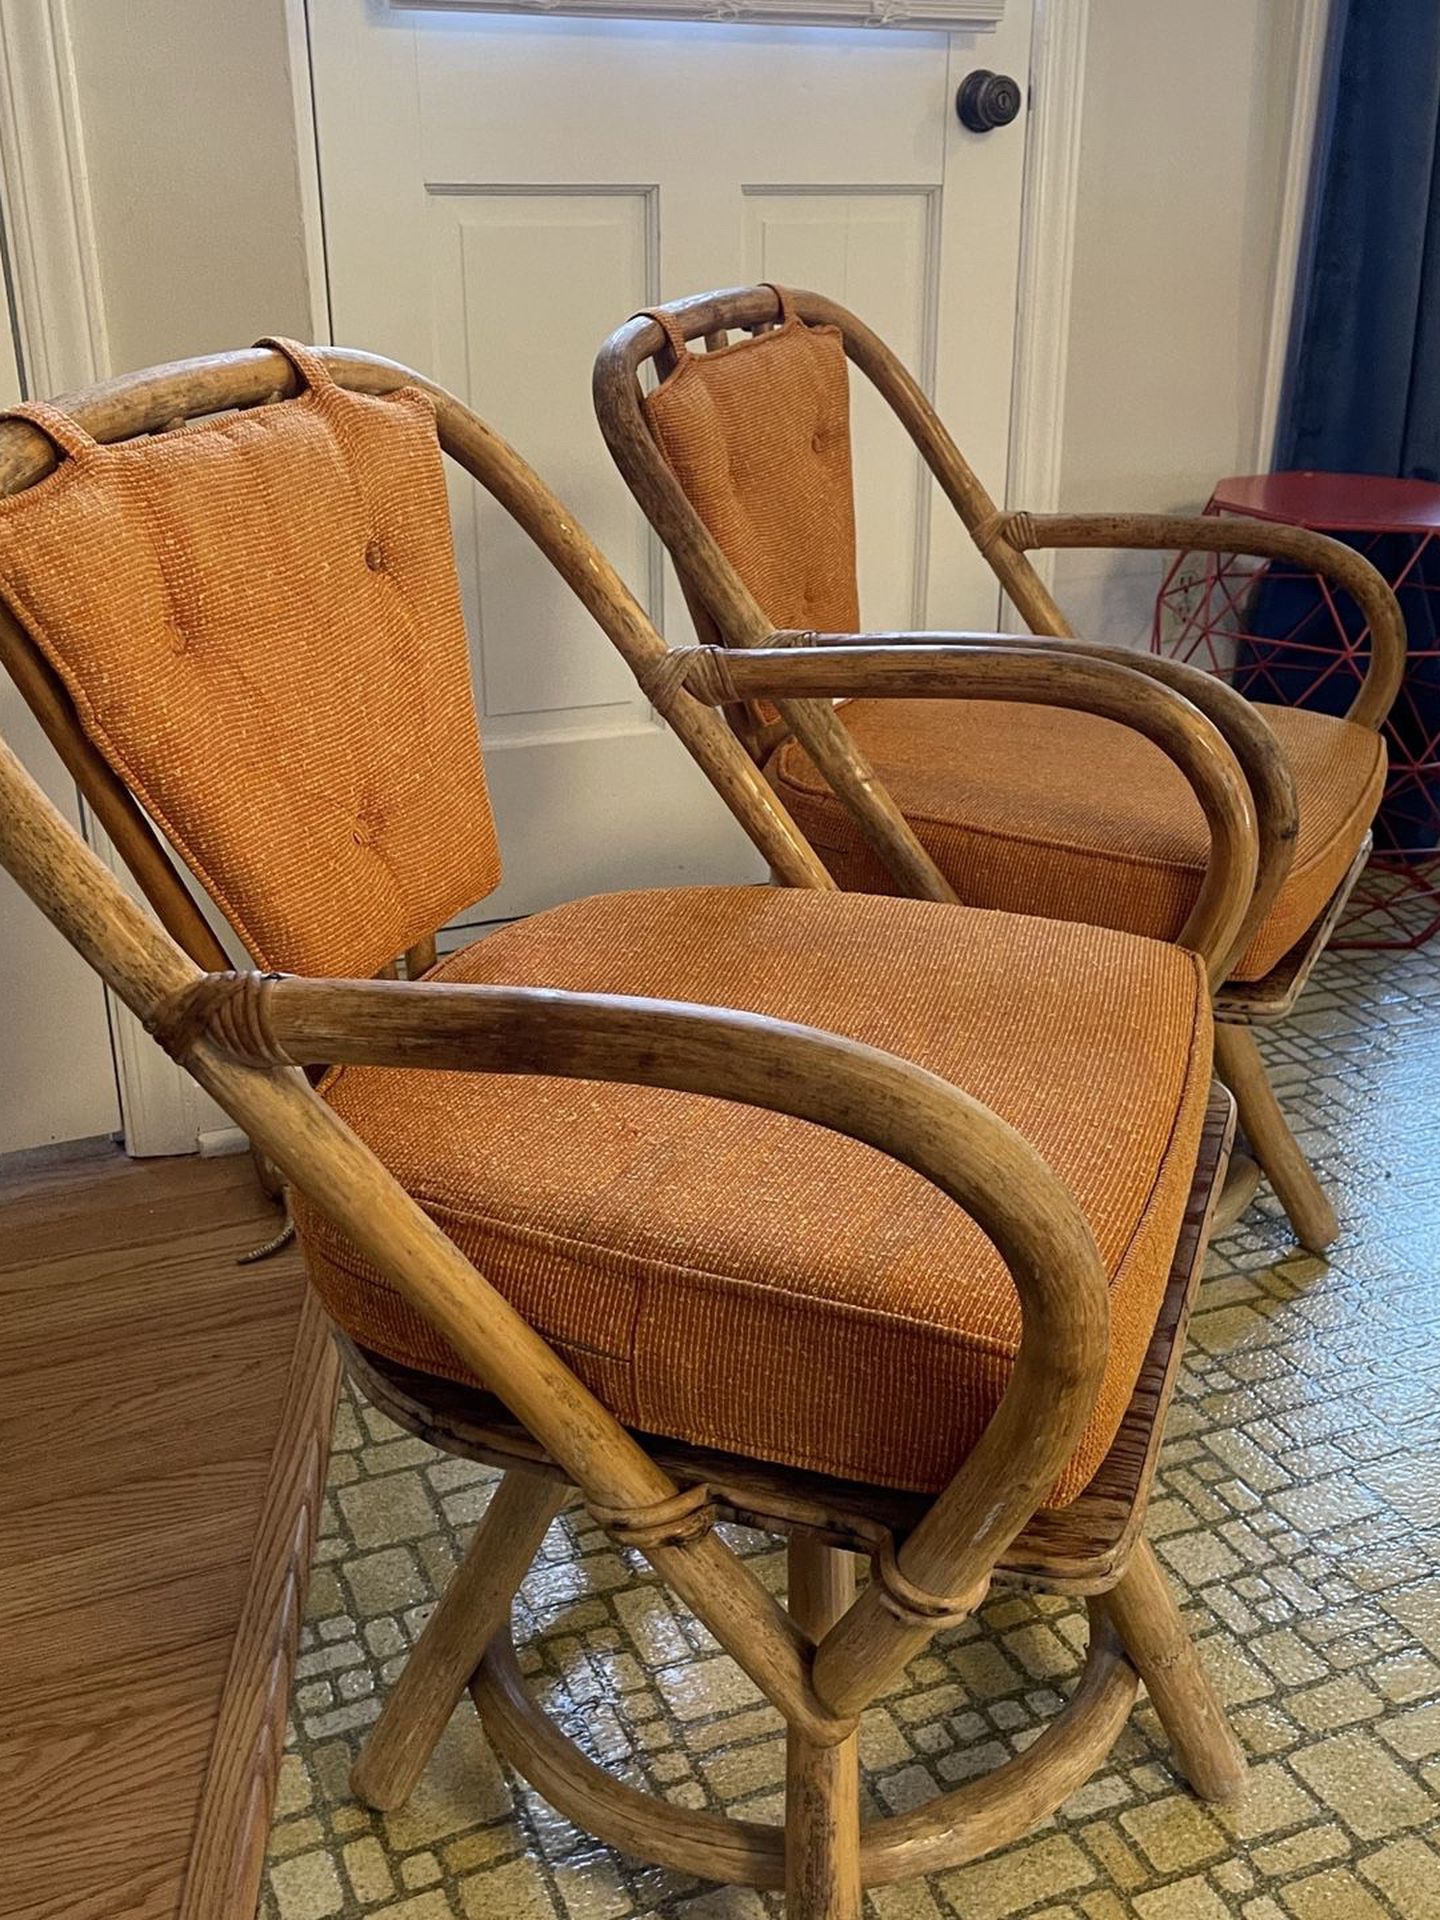 Vintage ratttan swivel chairs